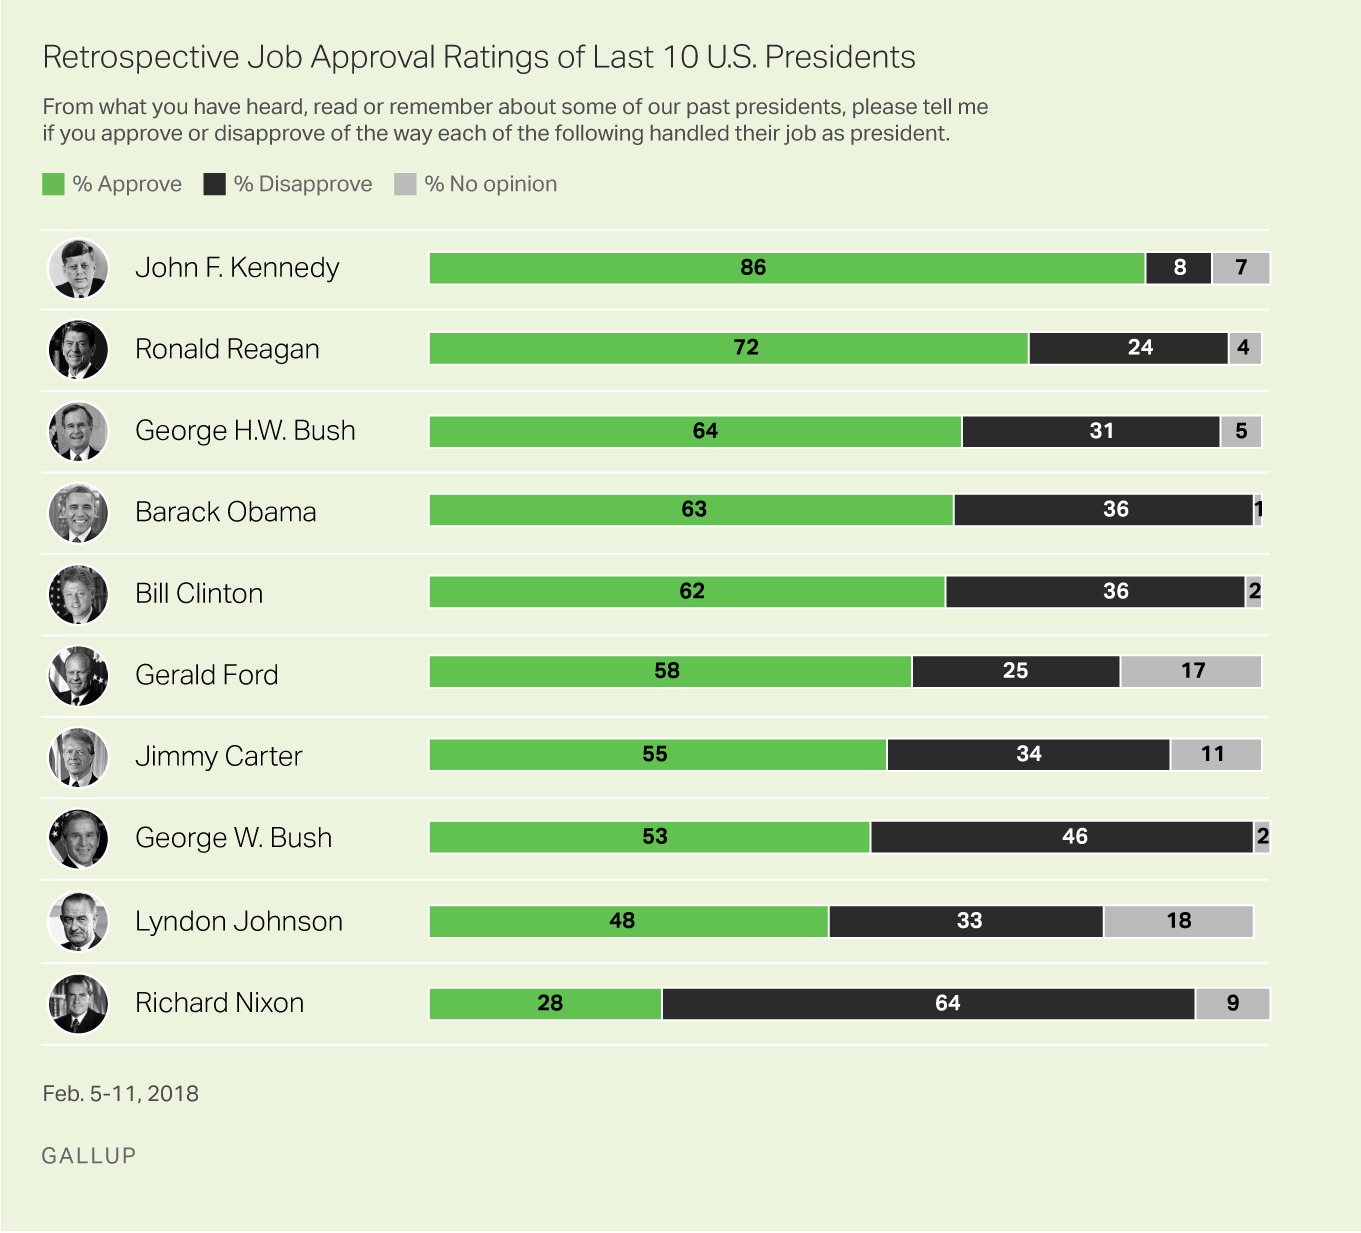 Retrospective Job Approval Ratings of Last 10 U.S. Presidents